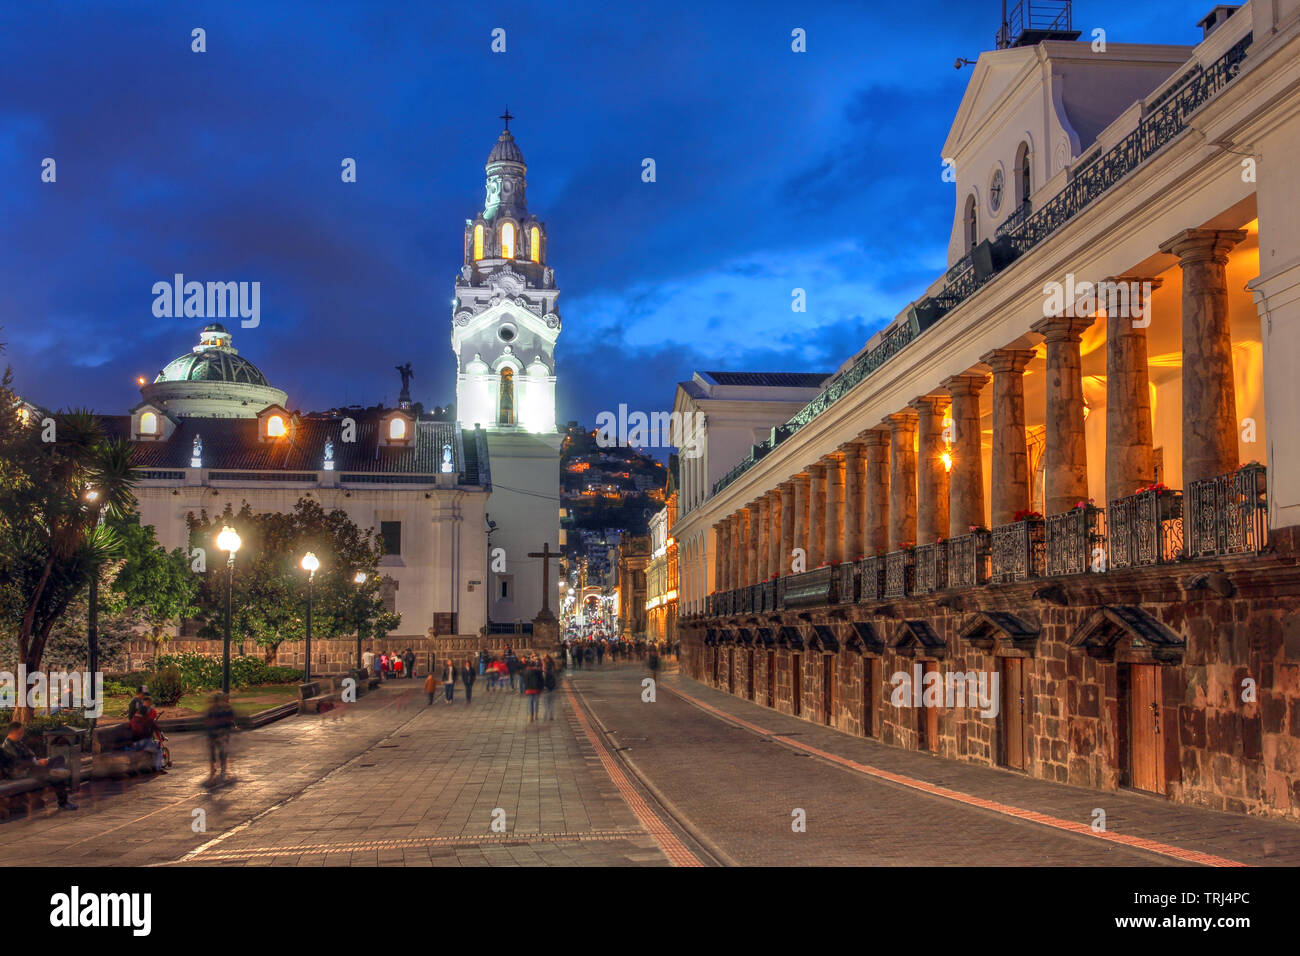 Night scene of Plaza Grande (Plaza de la Independencia) in Quito, Ecuador featuring Quito Cathedral and Carondelet Palace (Palacio de Carondelet), the Stock Photo